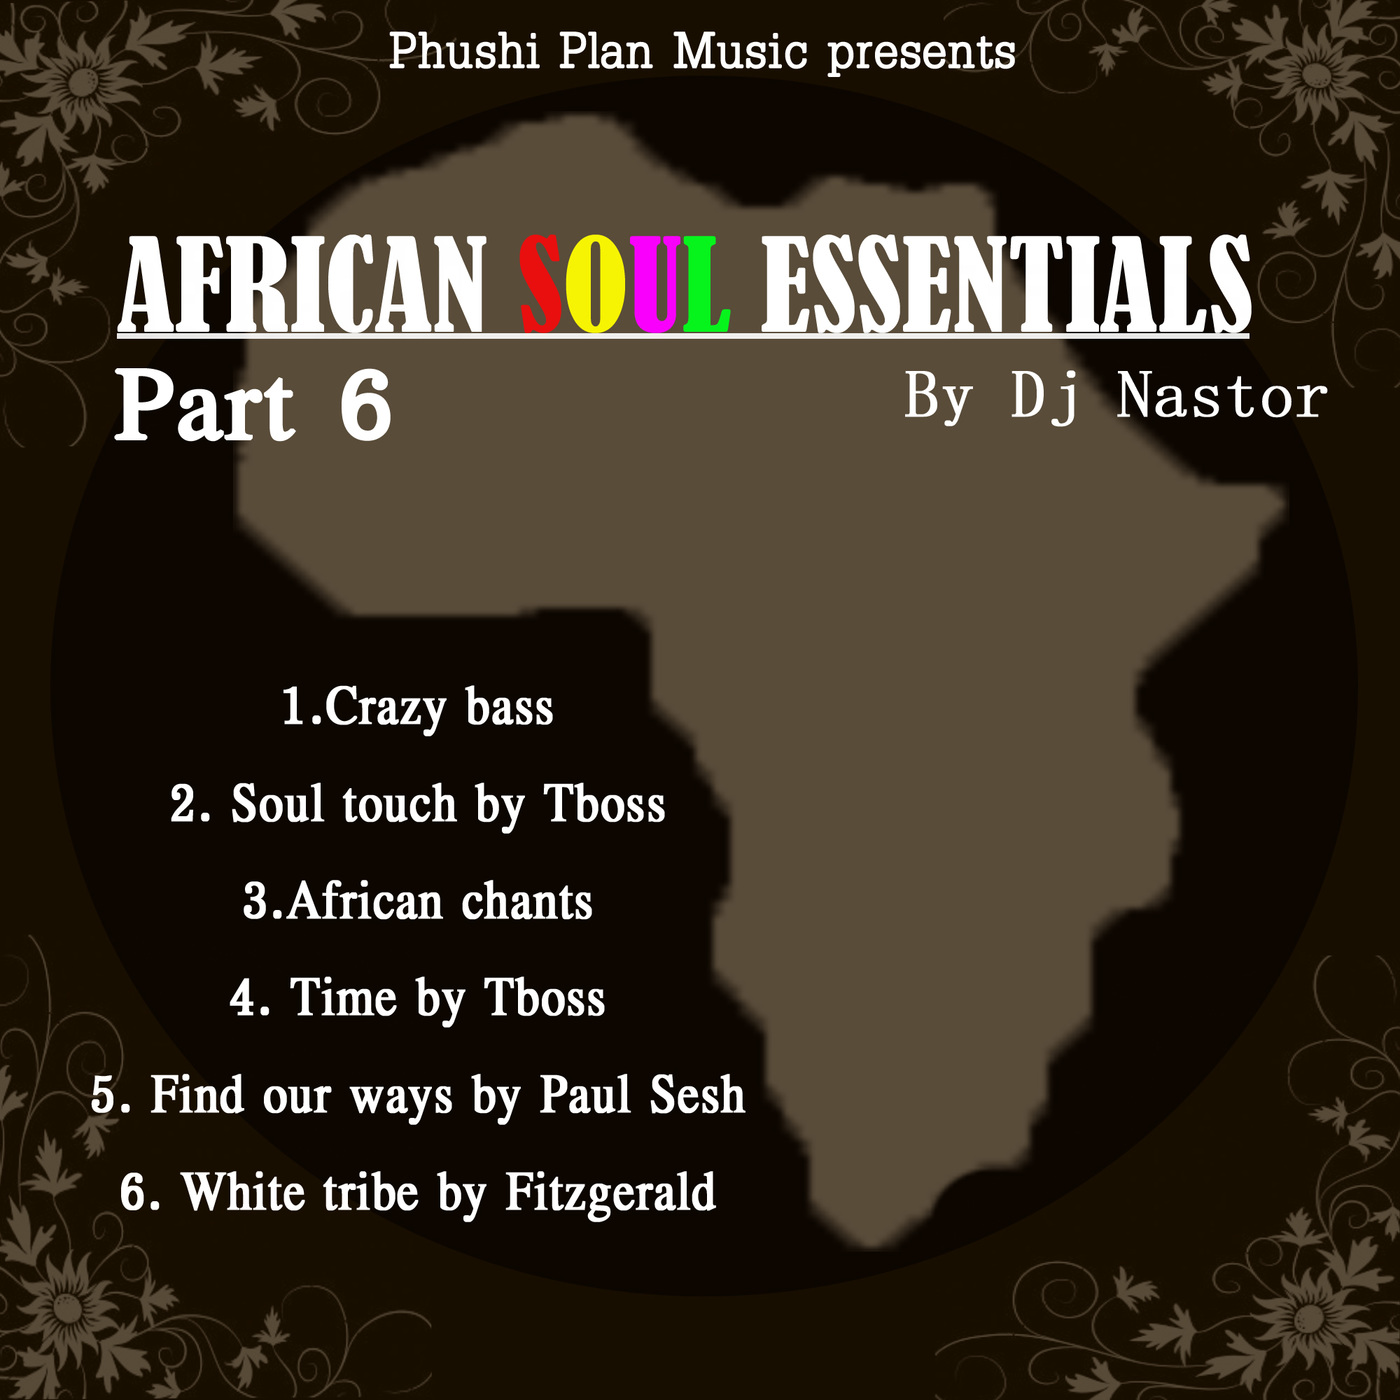 Dj Nastor - African soul essentials Part 6 / Phushi Plan music